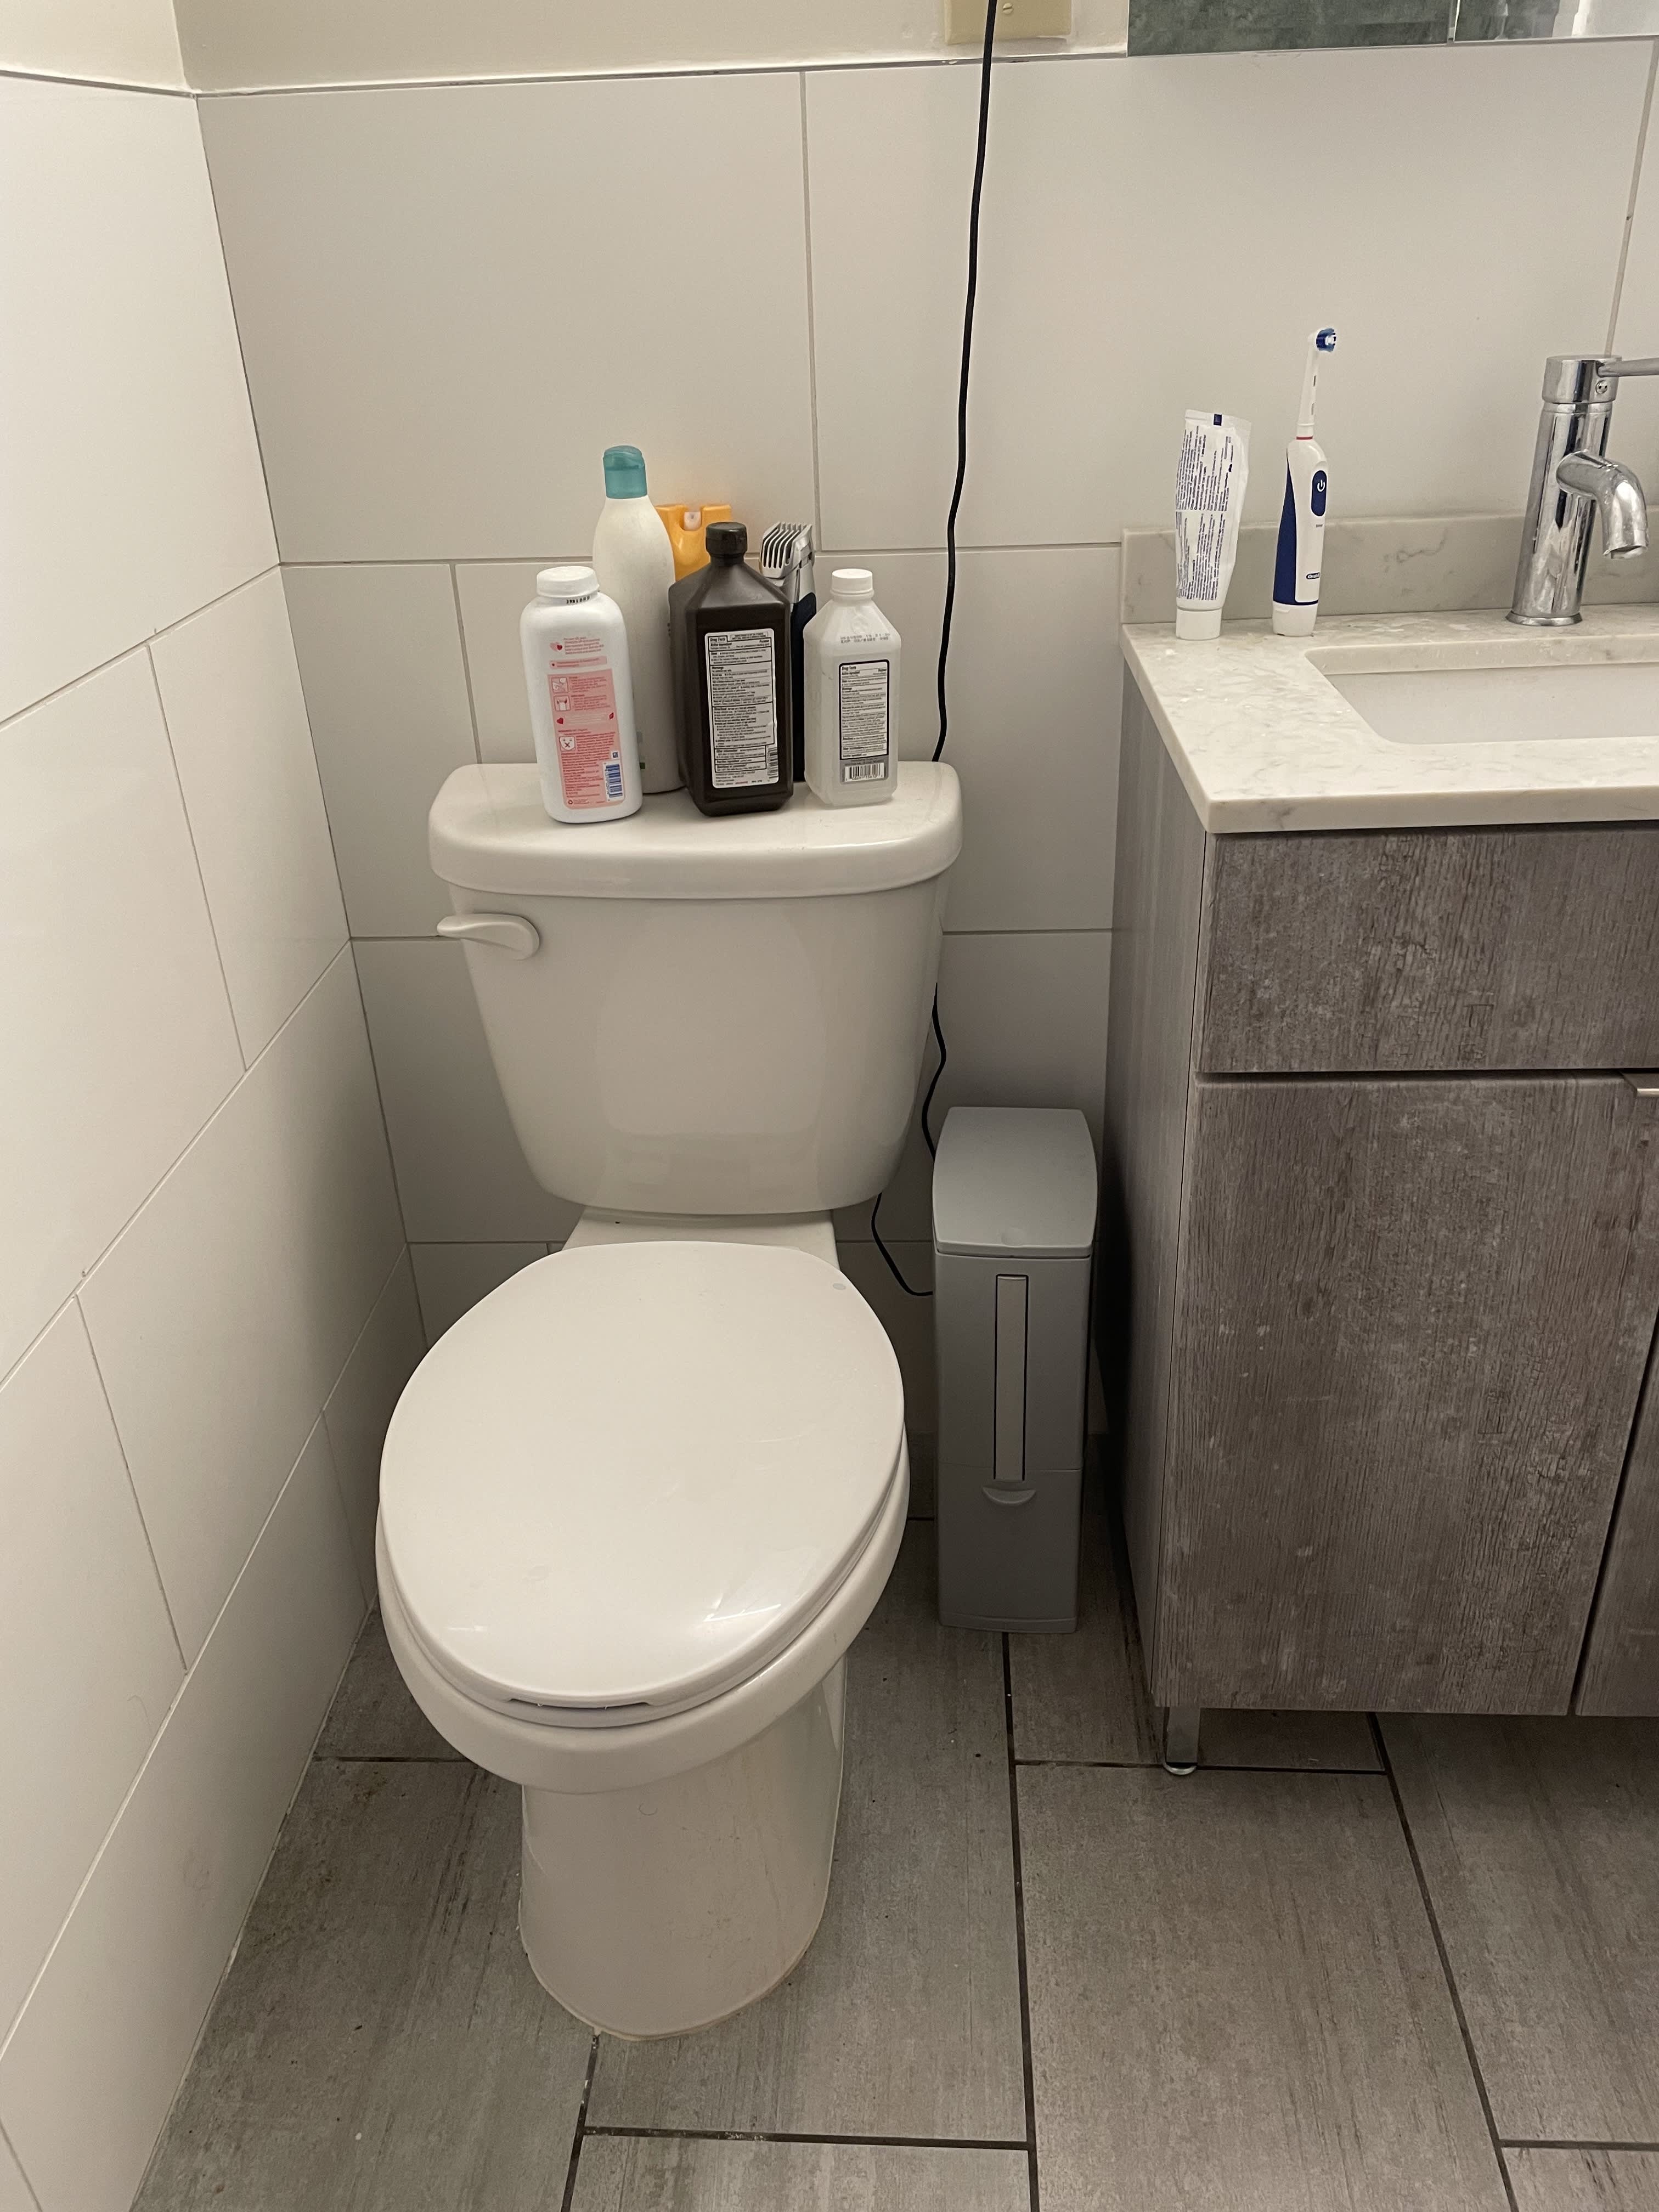 https://cdn.apartmenttherapy.info/image/upload/v1659982874/at/cq-acrylic-amazon-bathroom-trash-can.jpg